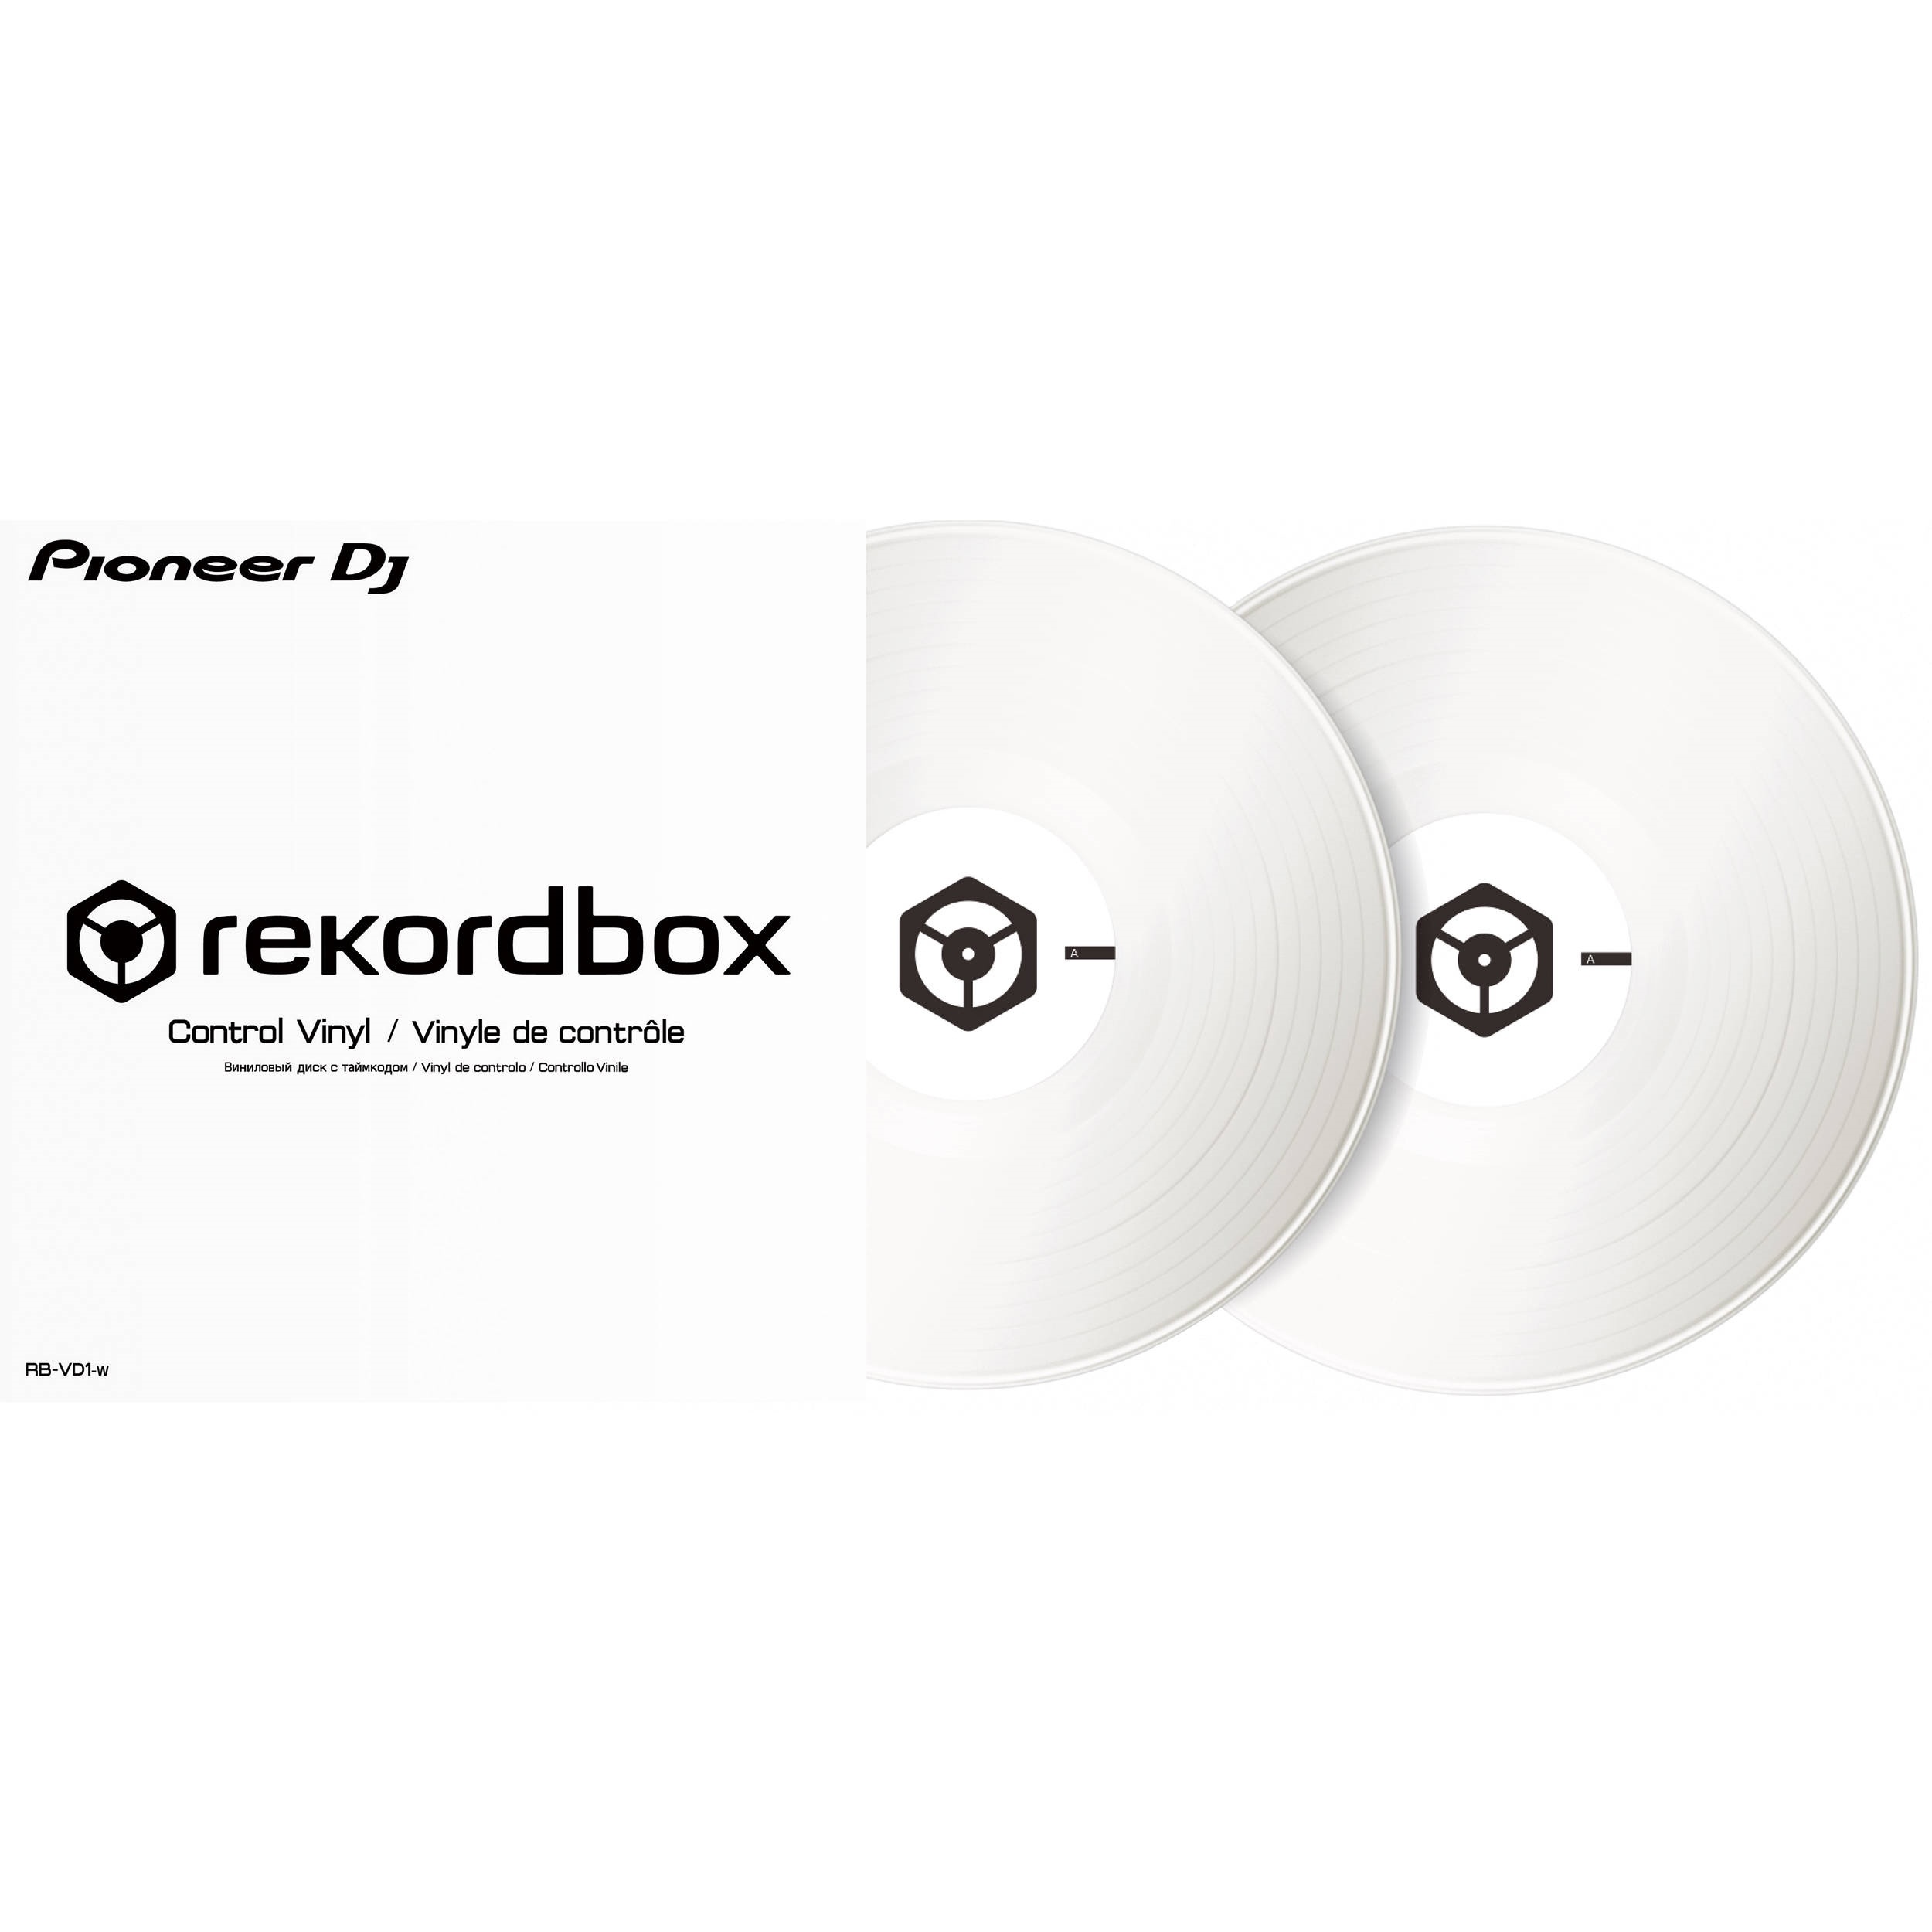 Pioneer DJ RB-VD1-W Control Vinyl for rekordbox dj - Double Pack (White)